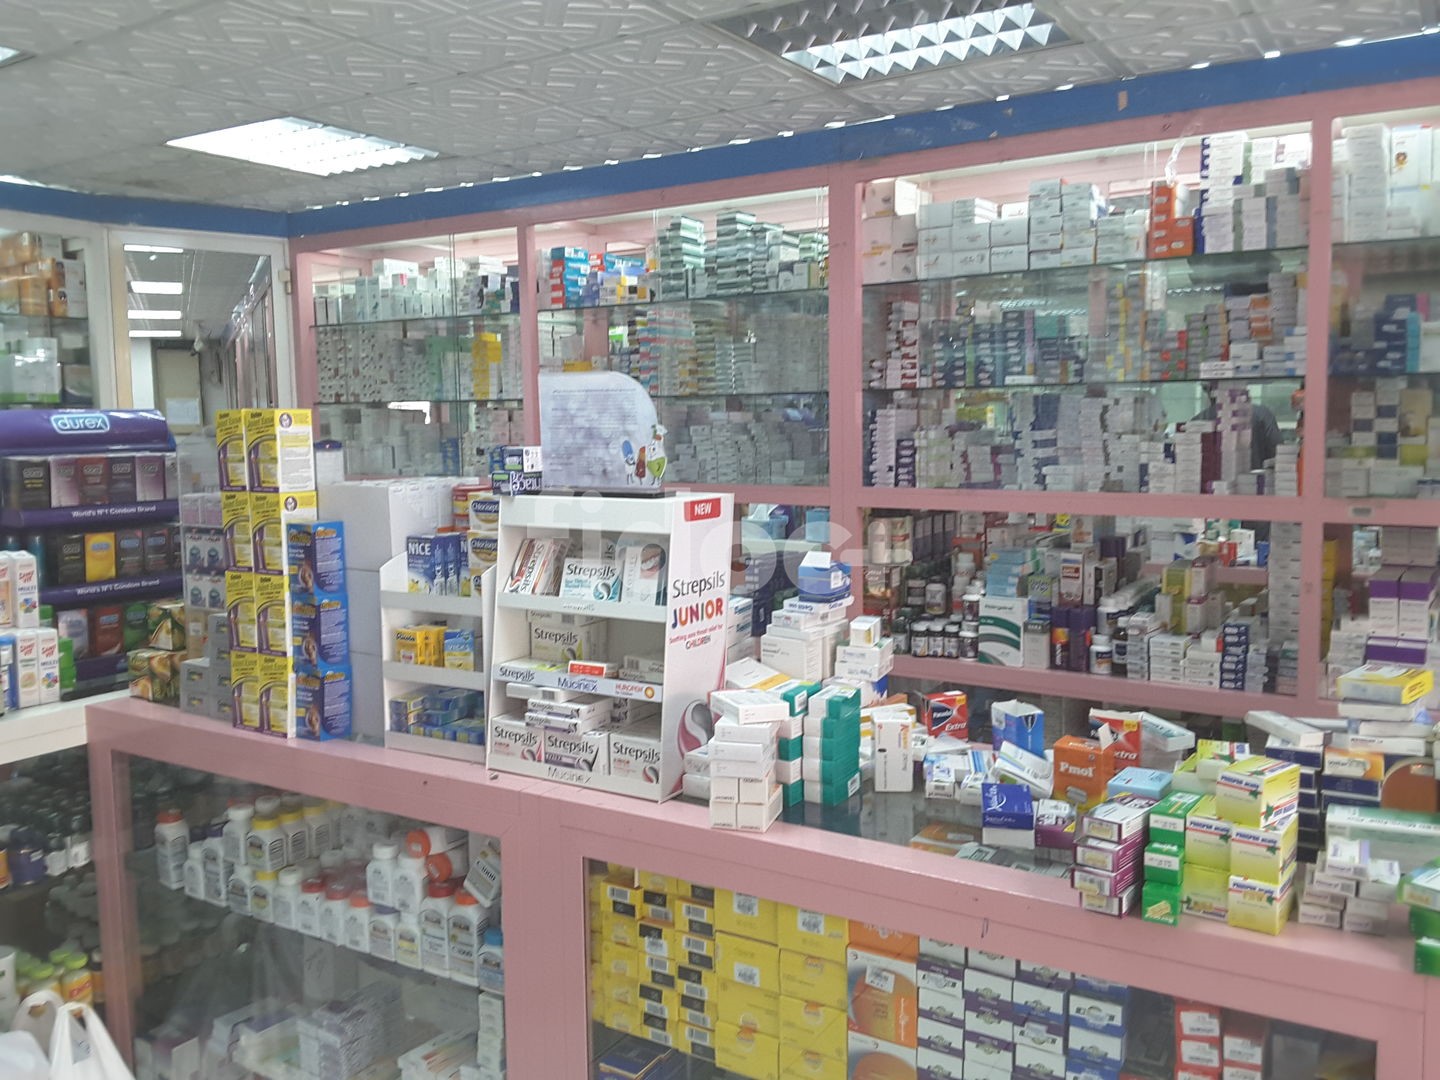 Oman Pharmacy, Dubai